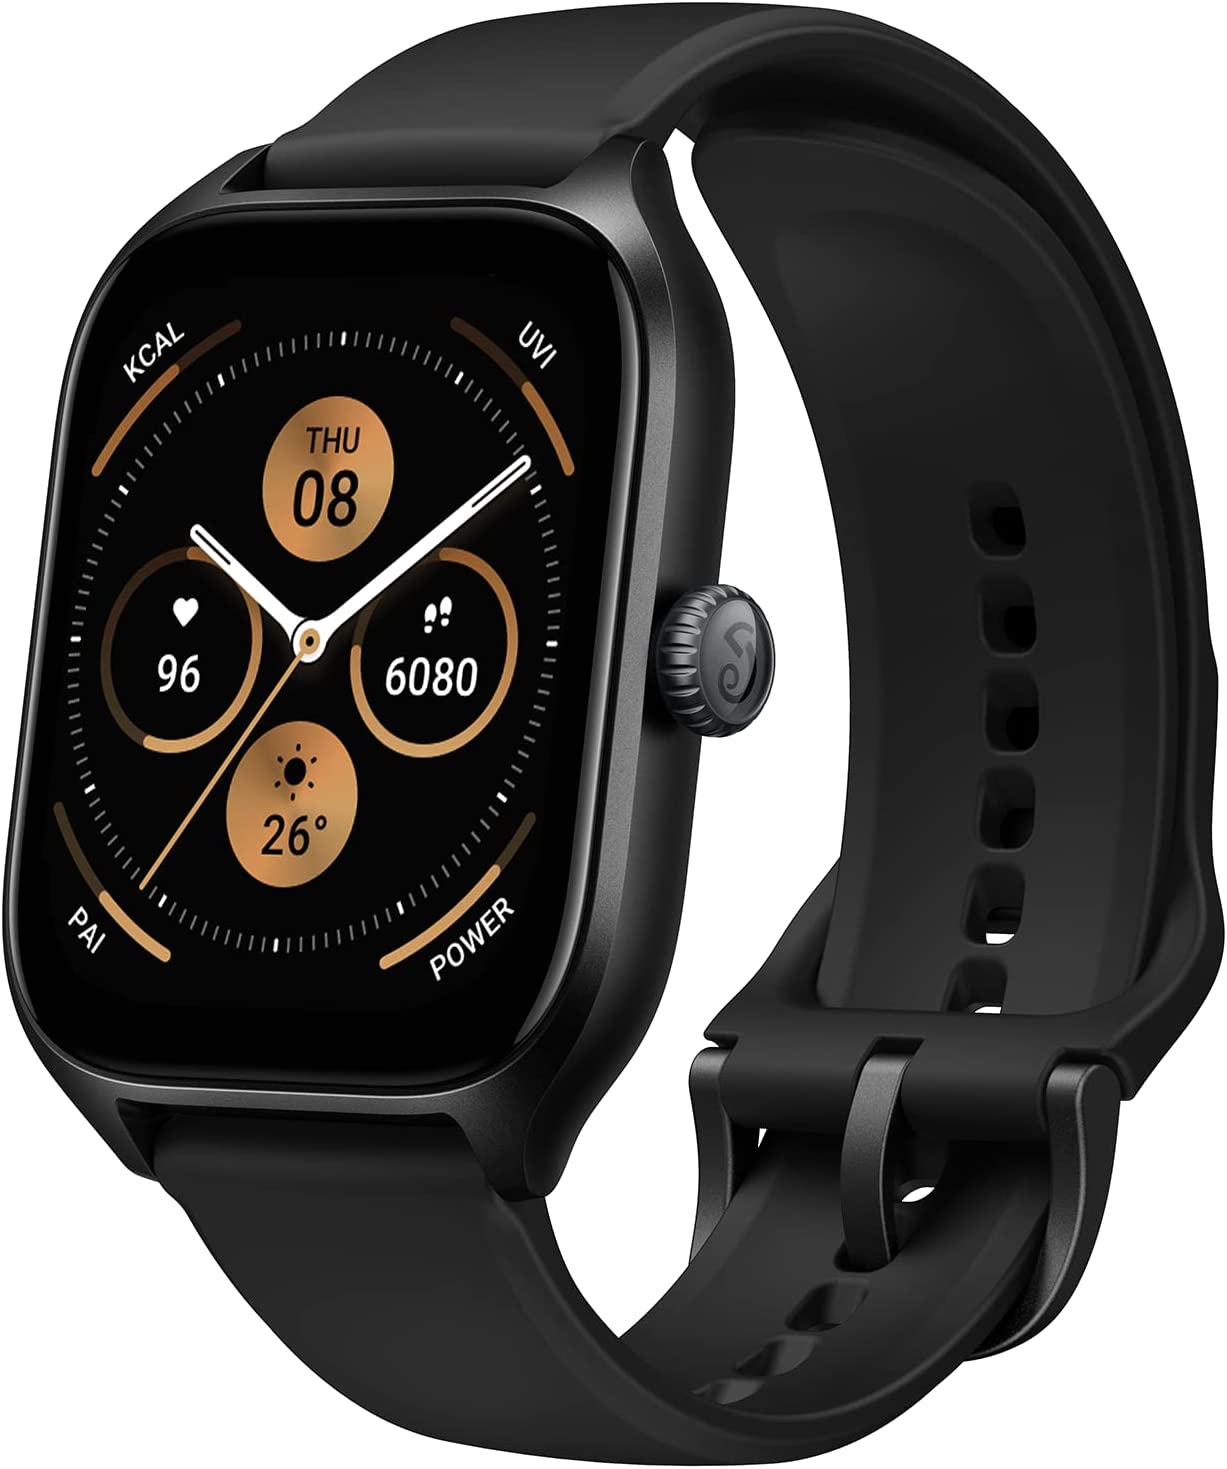 Amazfit GTS 4 Smart Watch-Black